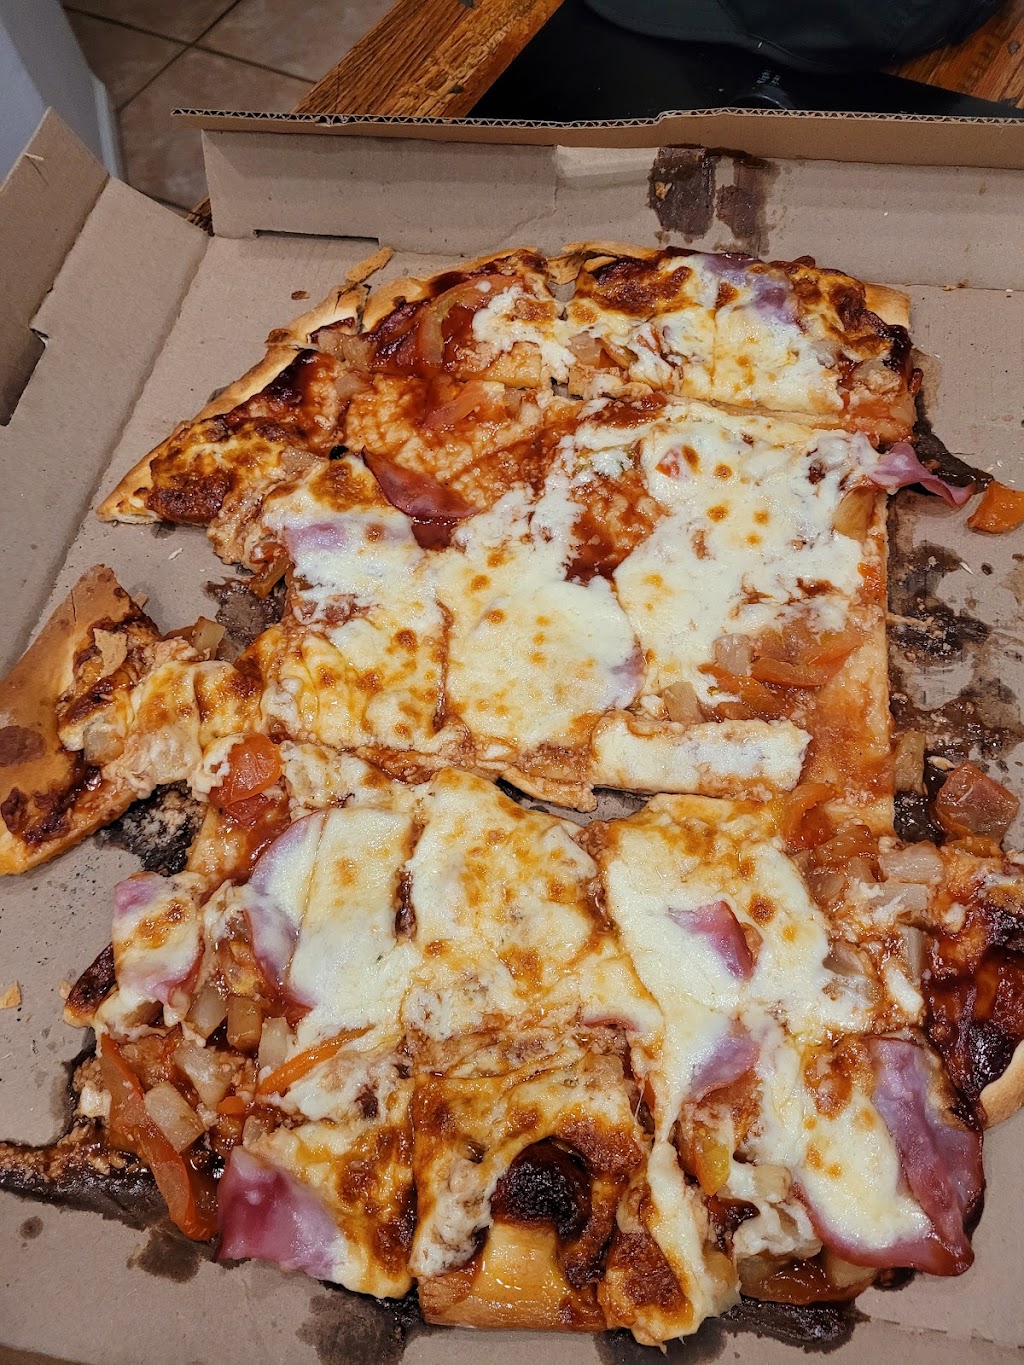 Rosatis Pizza | 1730 E Warner Rd #5, Tempe, AZ 85284 | Phone: (480) 820-4444